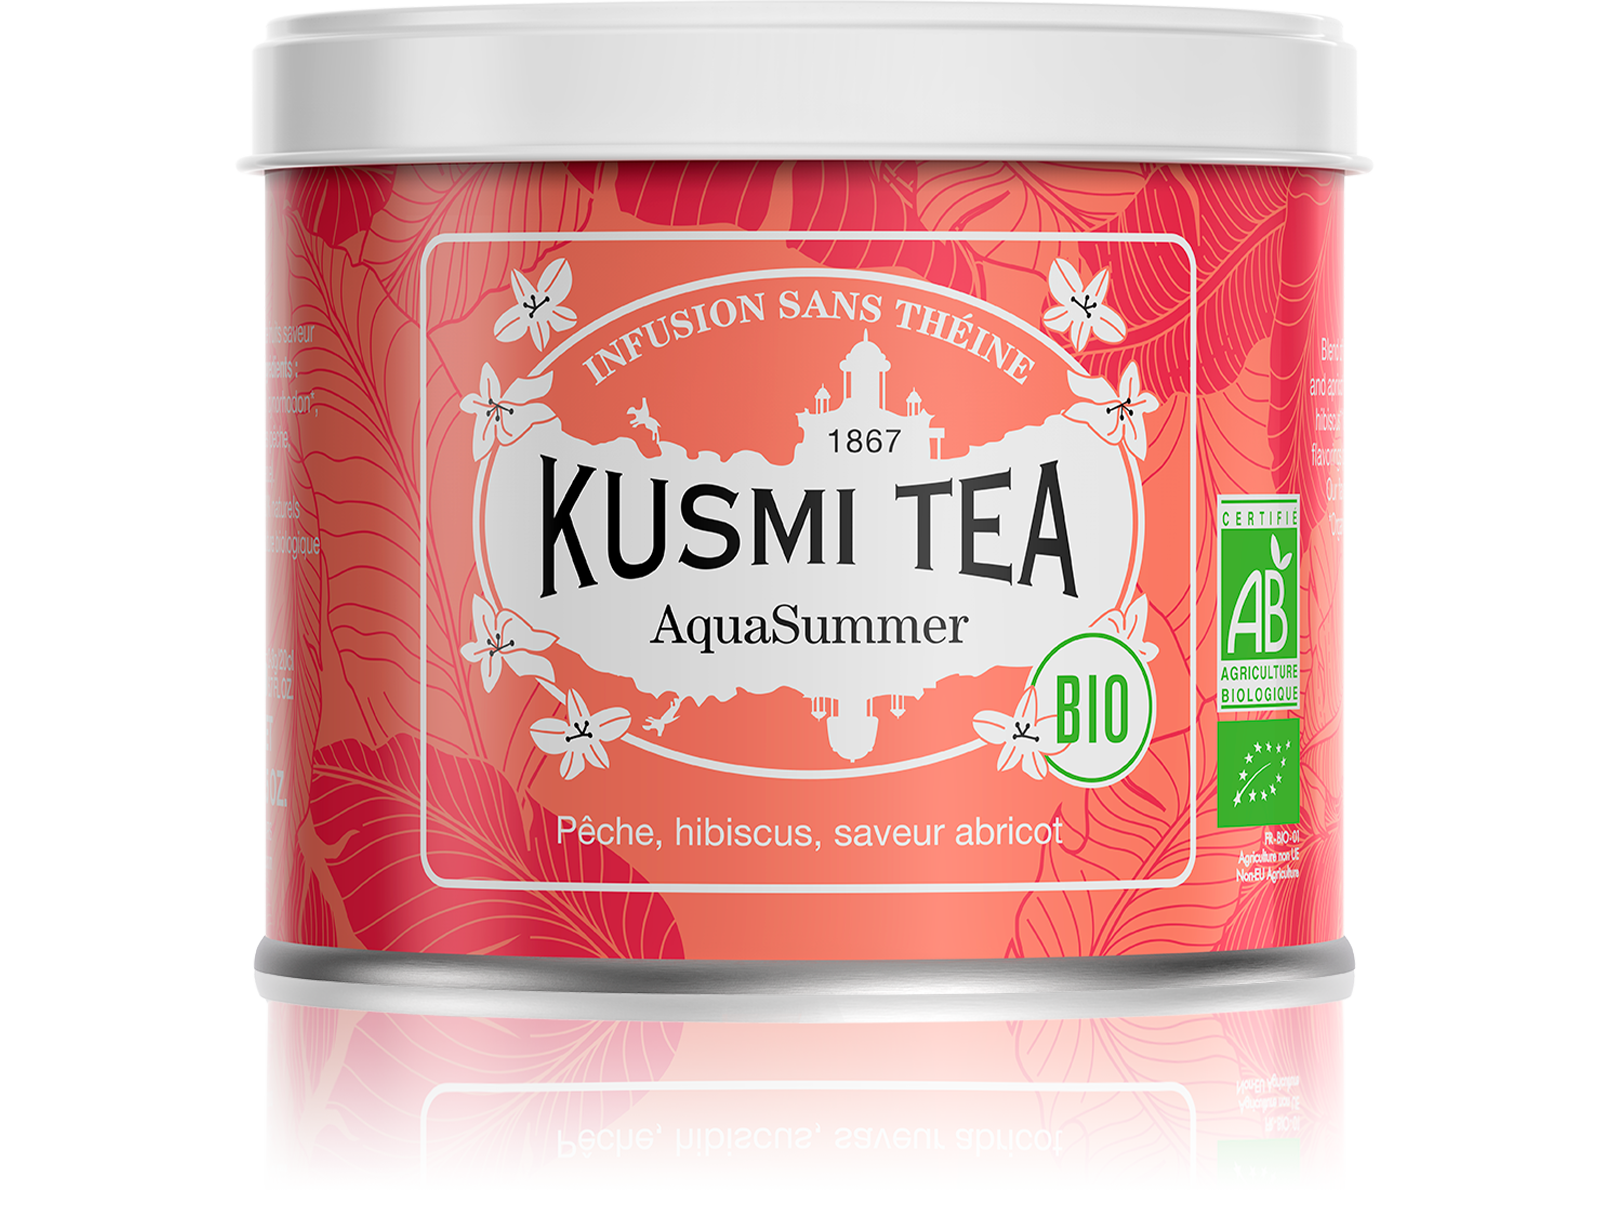 aqua summer - Kusmi Tea